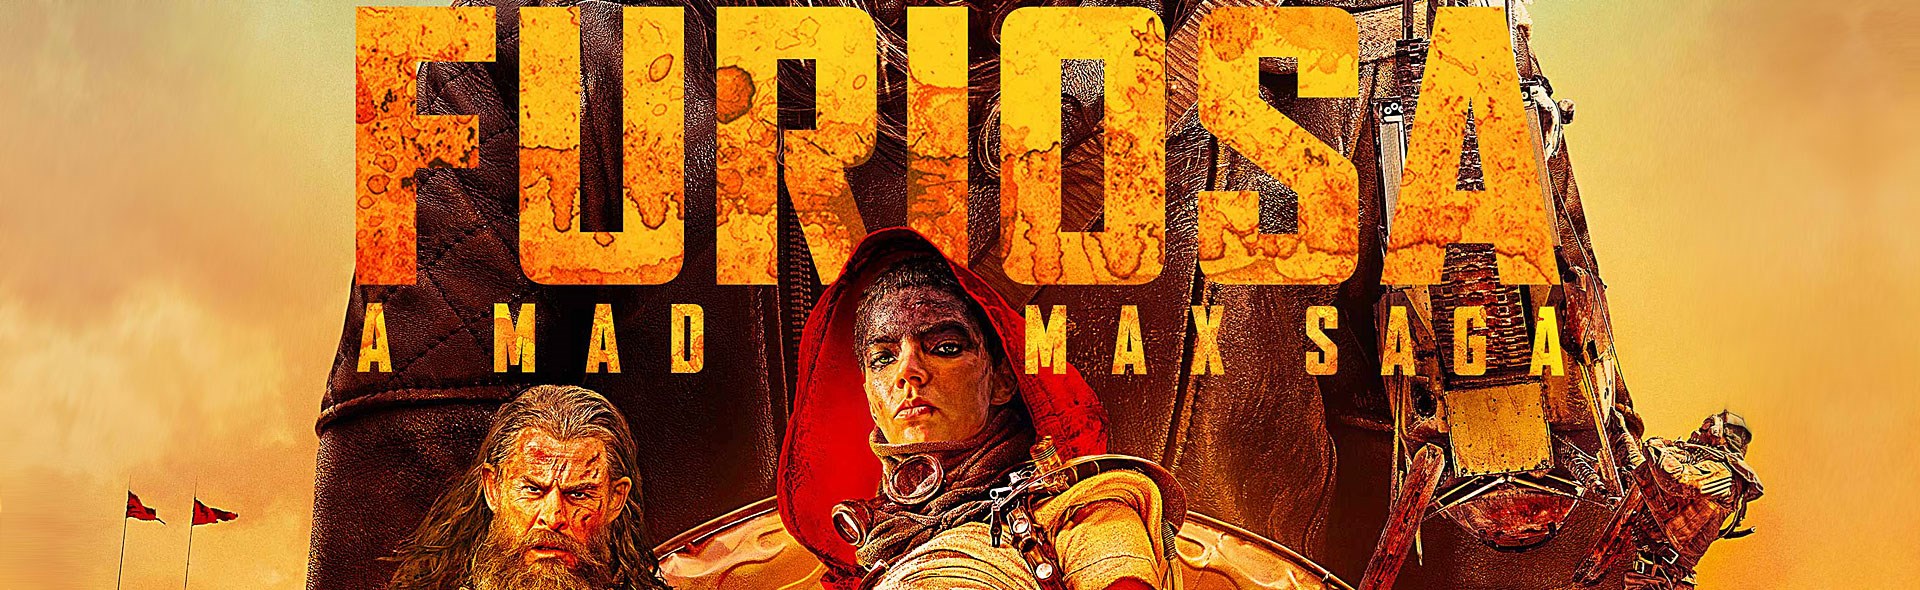 Furiosa: A mad max saga_slide_poster